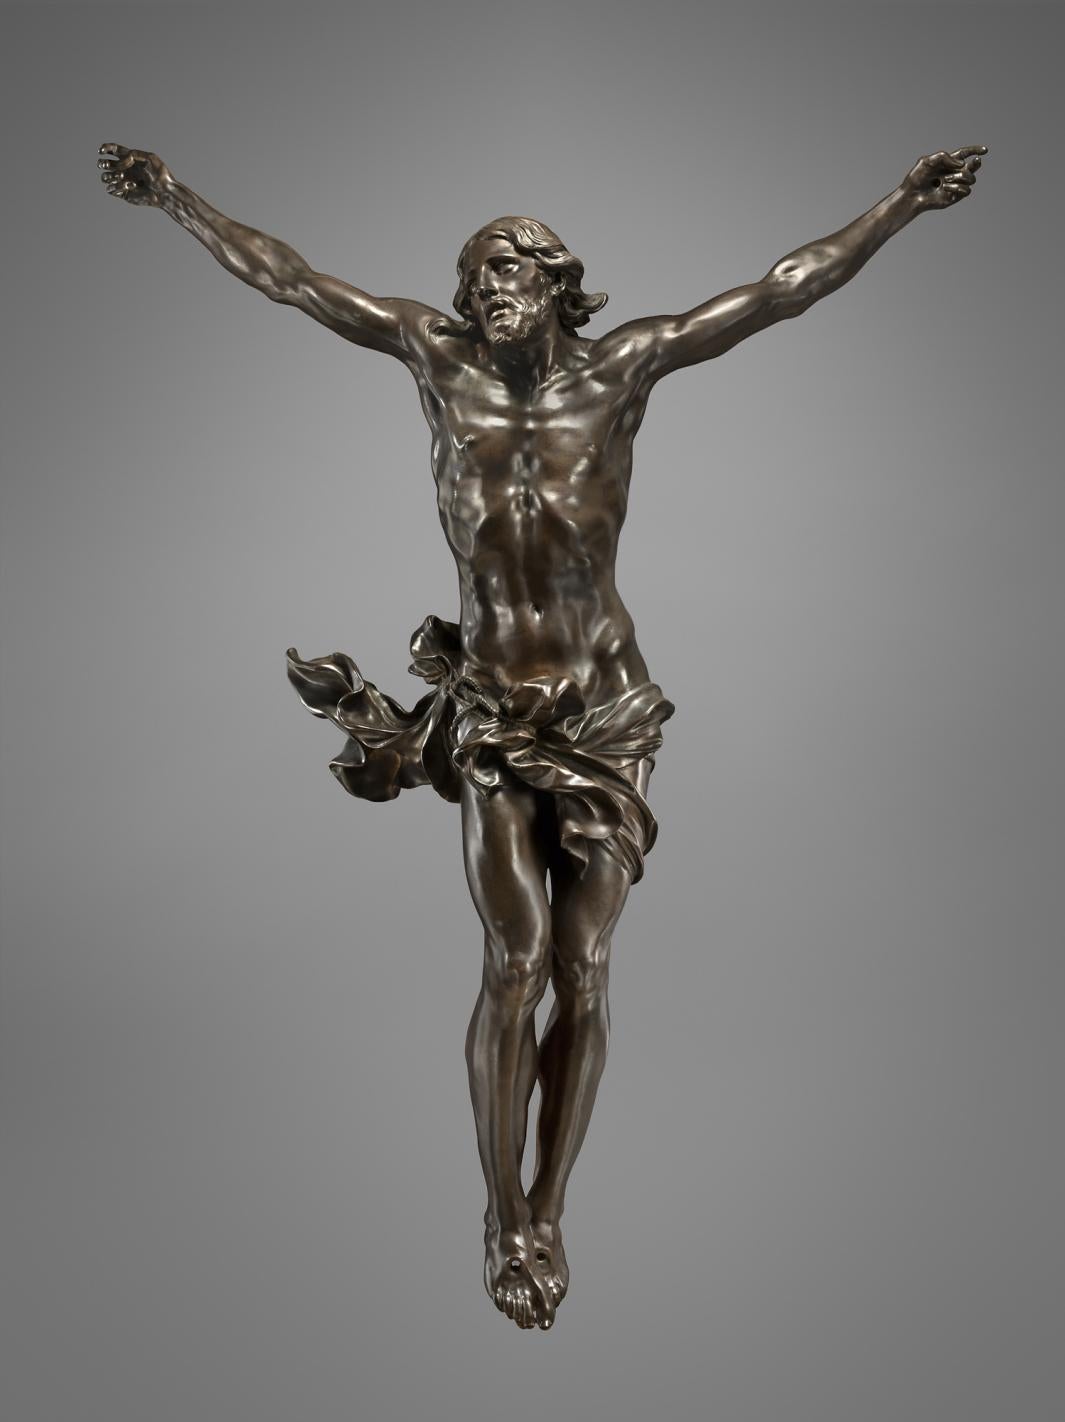 Bronze sculpture of Jesus Christ being crucified.